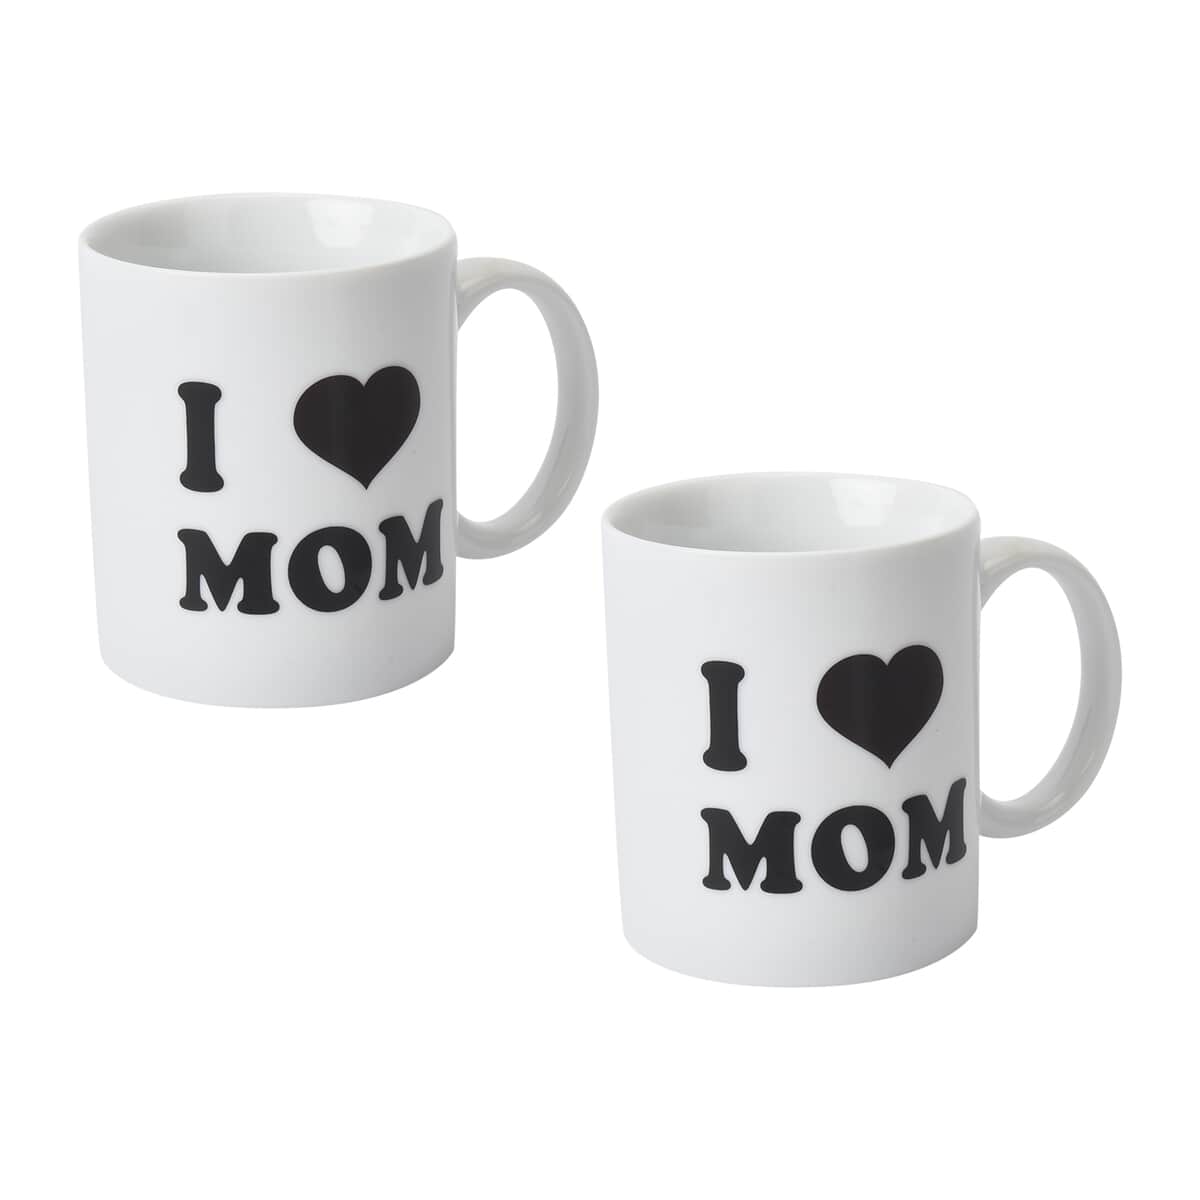 Set of 2 Black and White Ceramic Color Change I Love MOM Cup image number 0